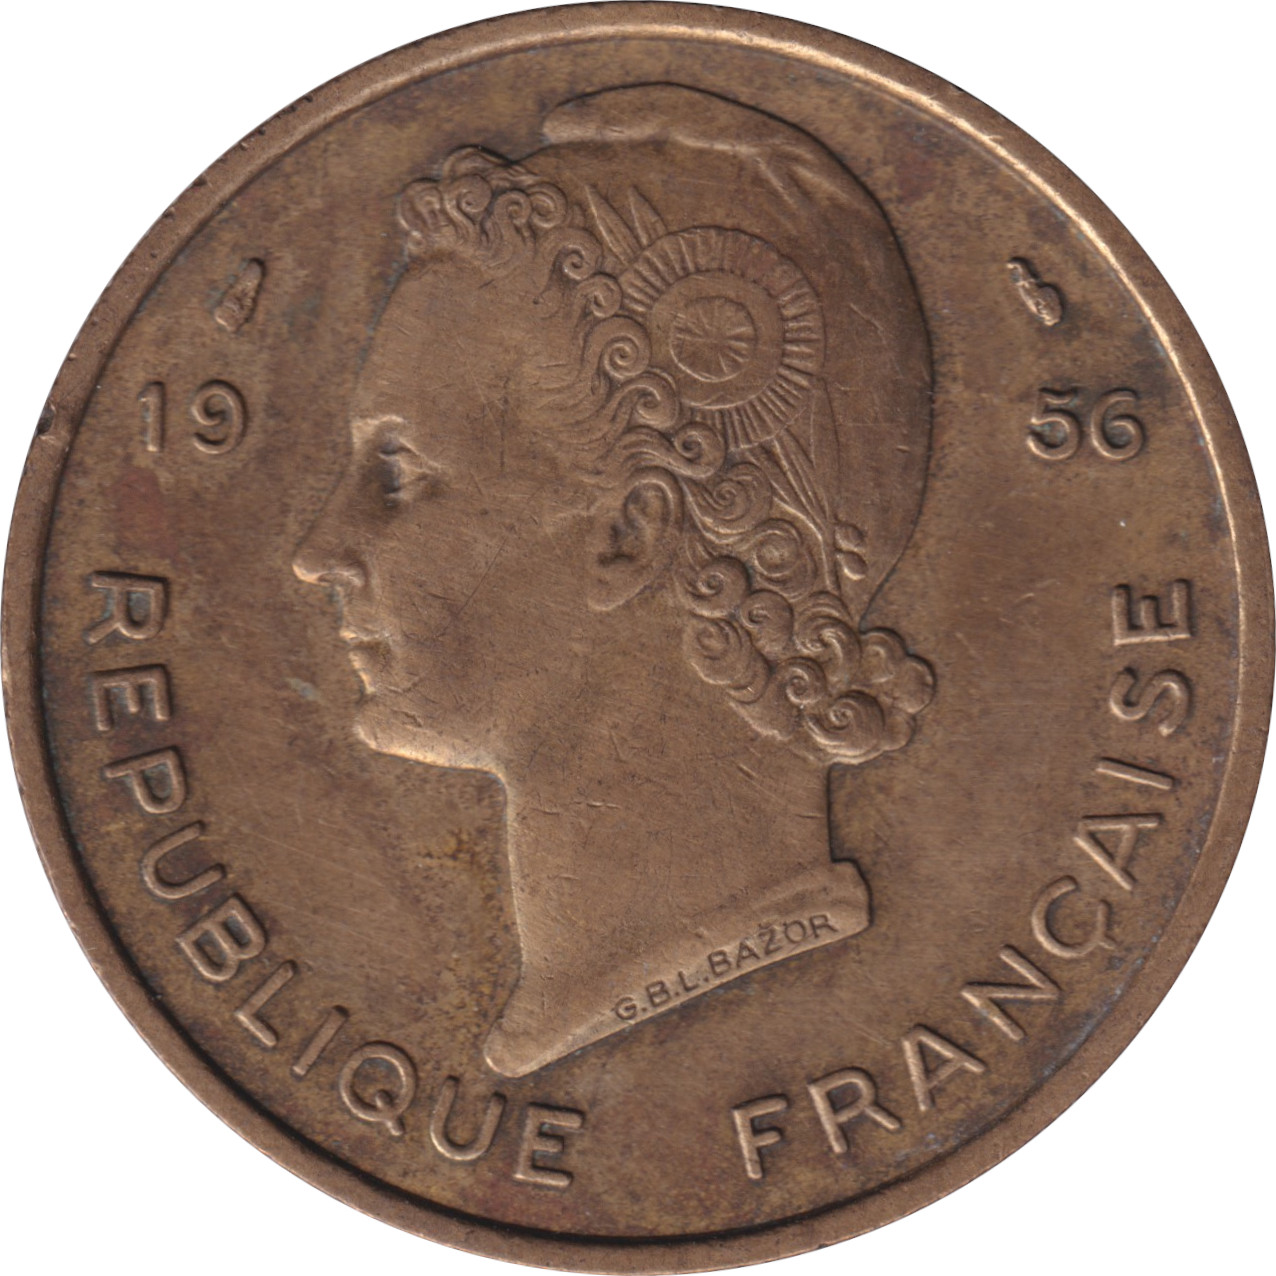 25 francs - Marianne